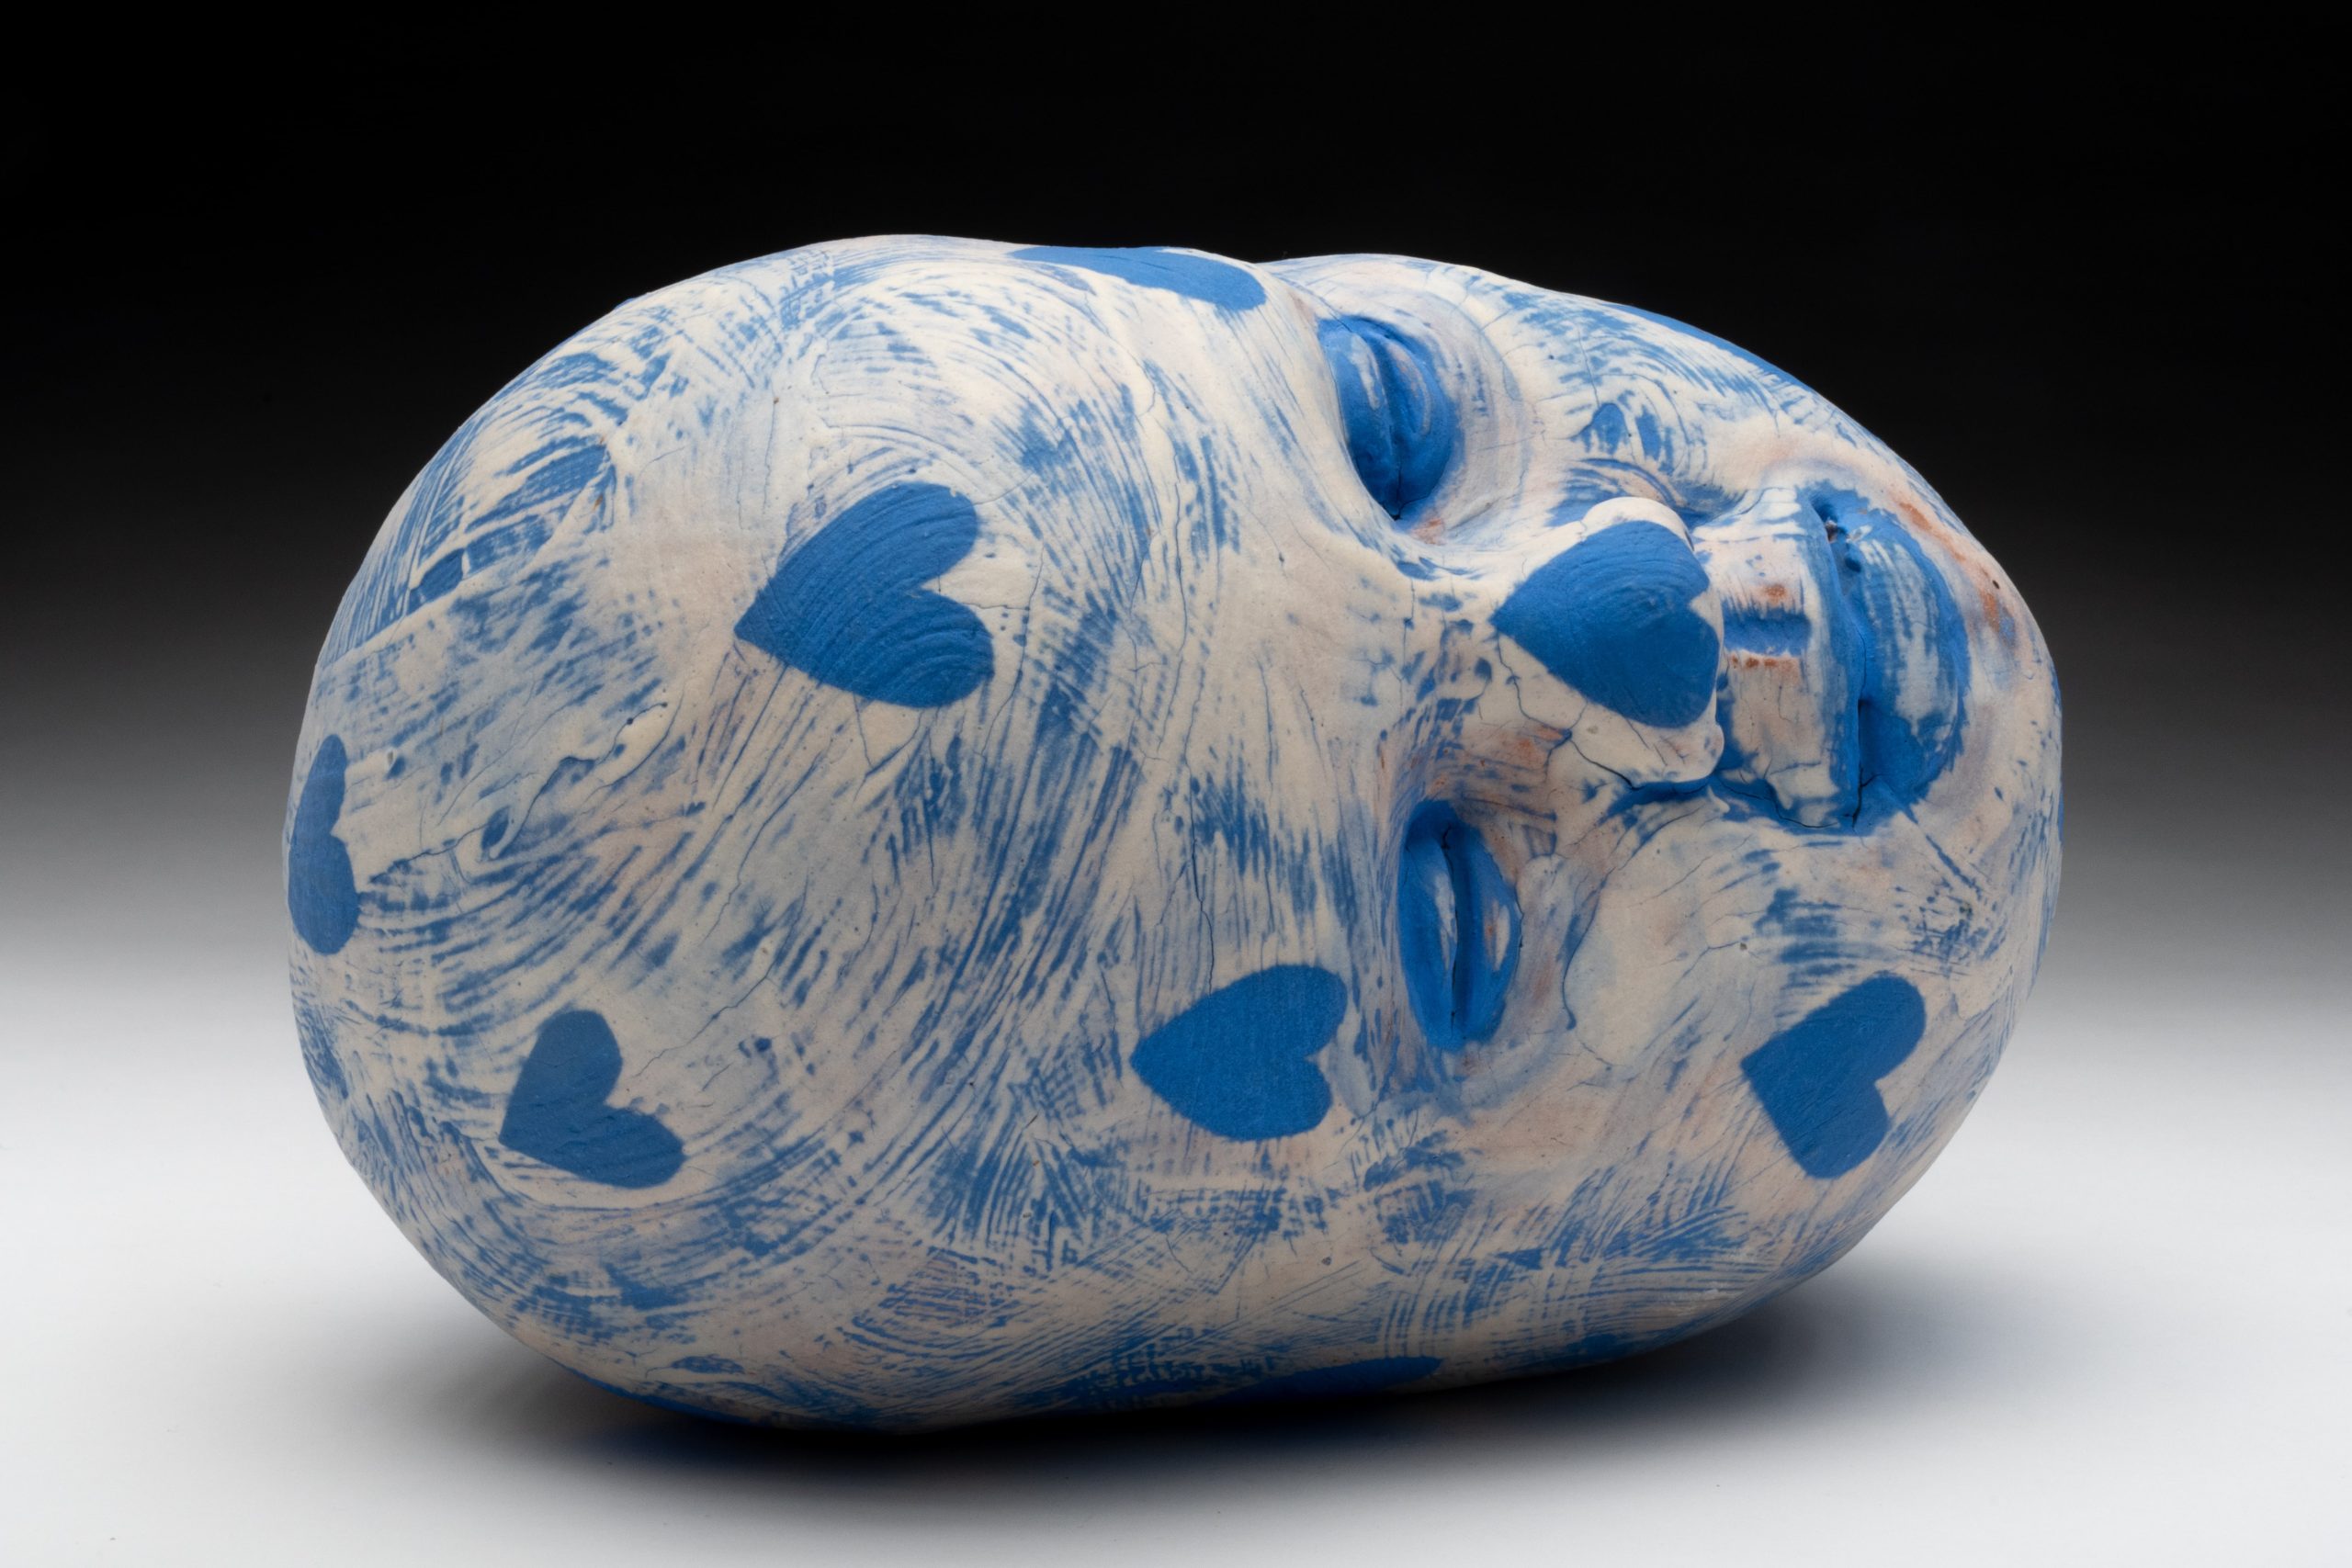 Blue Dormant Head by Tom Bartel